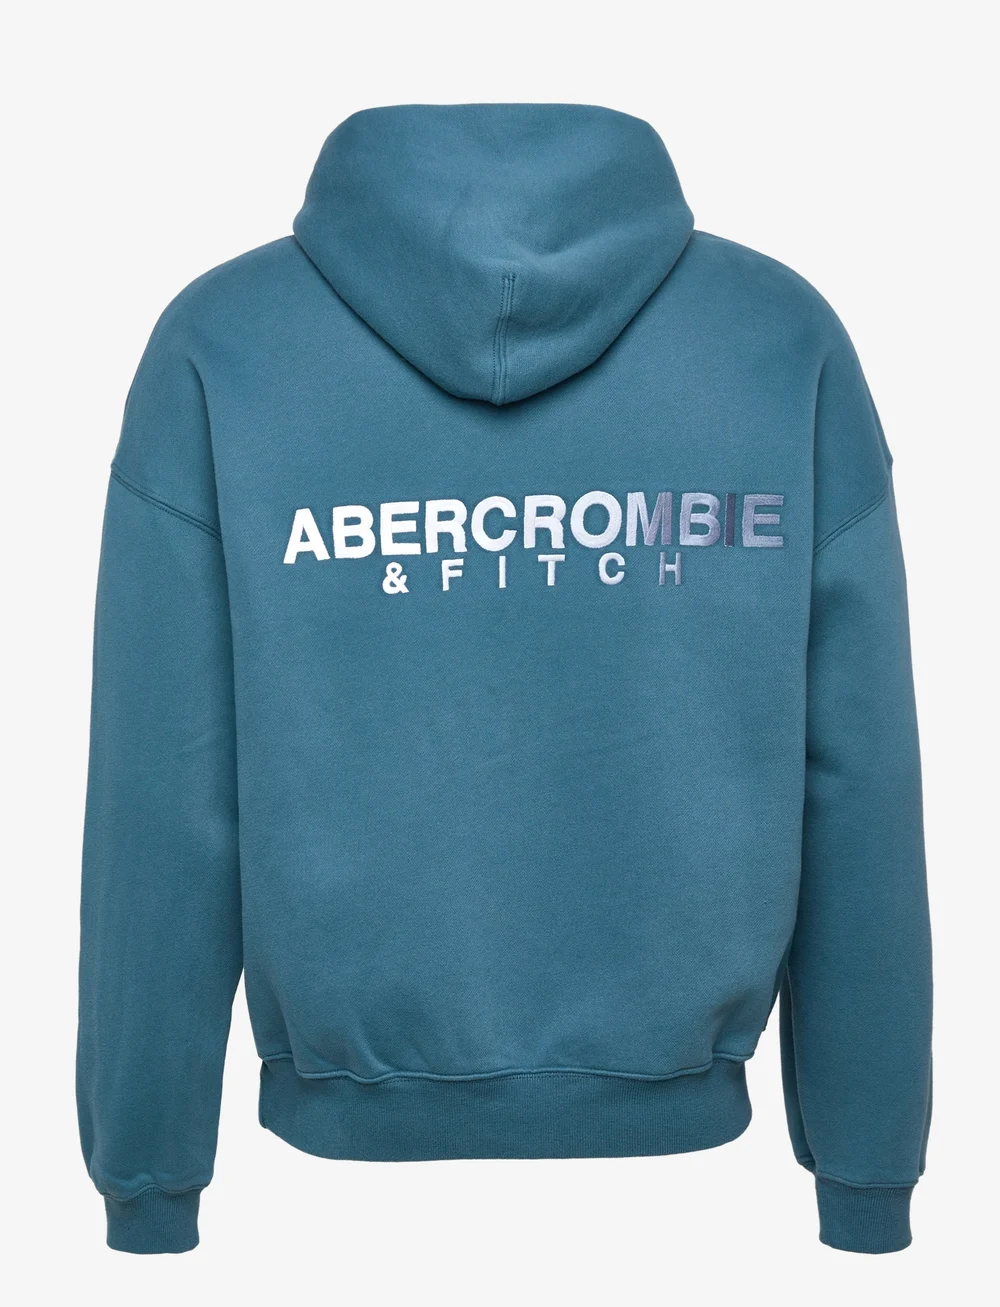 at – shop & Sweatshirts Abercrombie Fitch Mens Booztlet – sweatshirts & hoodies Anf